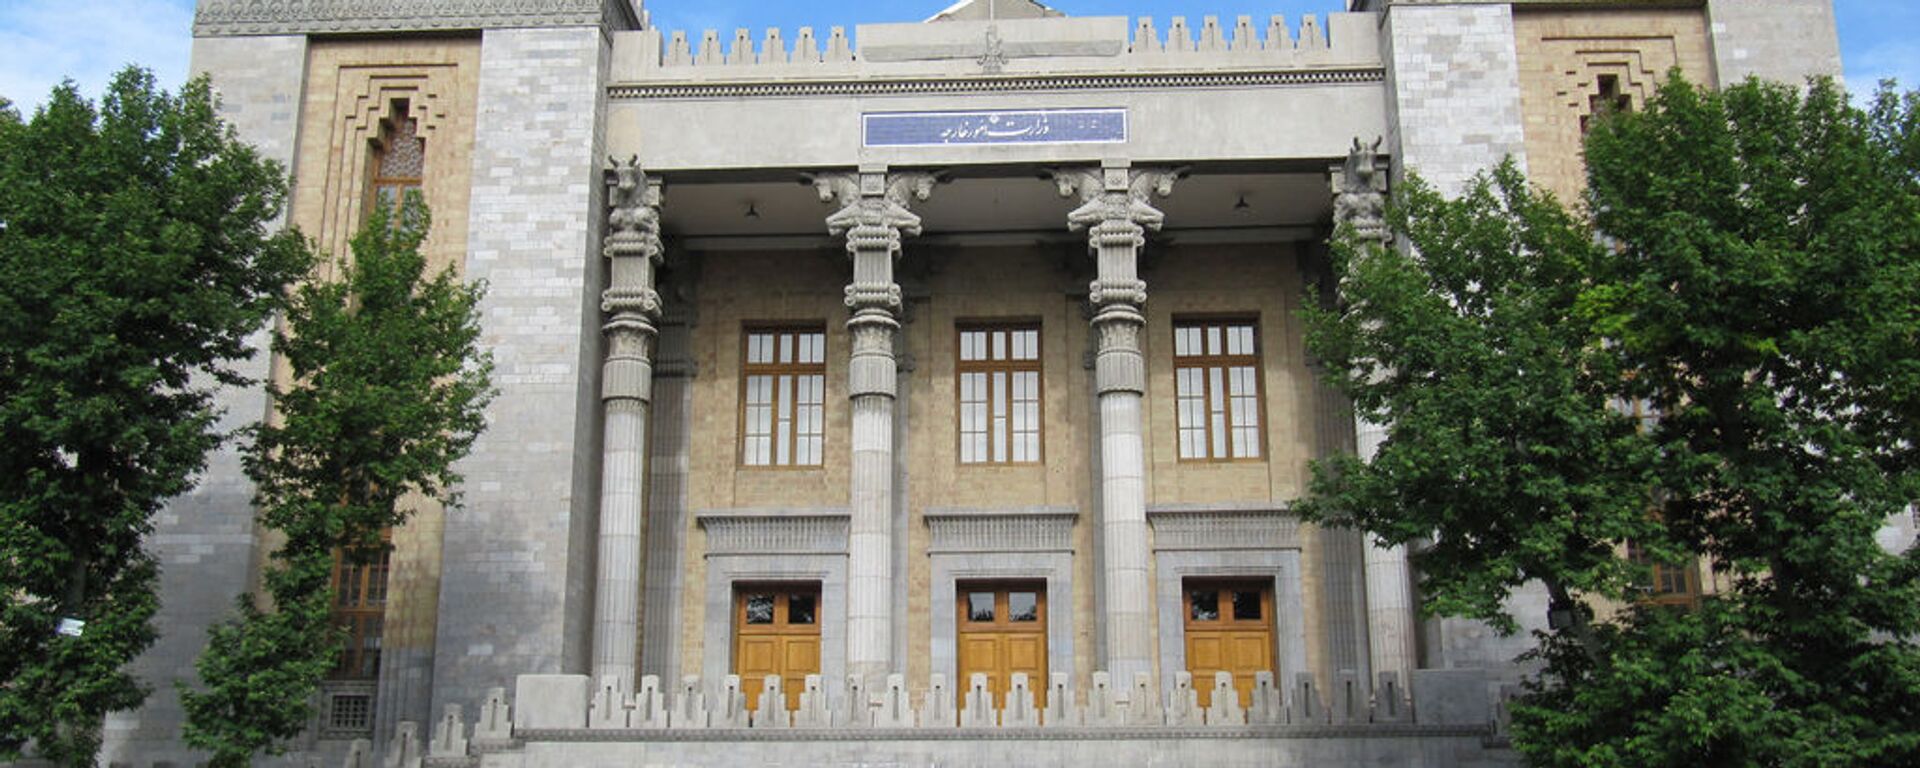 Здание МИД Исламской Республики Иран - Sputnik Արմենիա, 1920, 06.09.2021